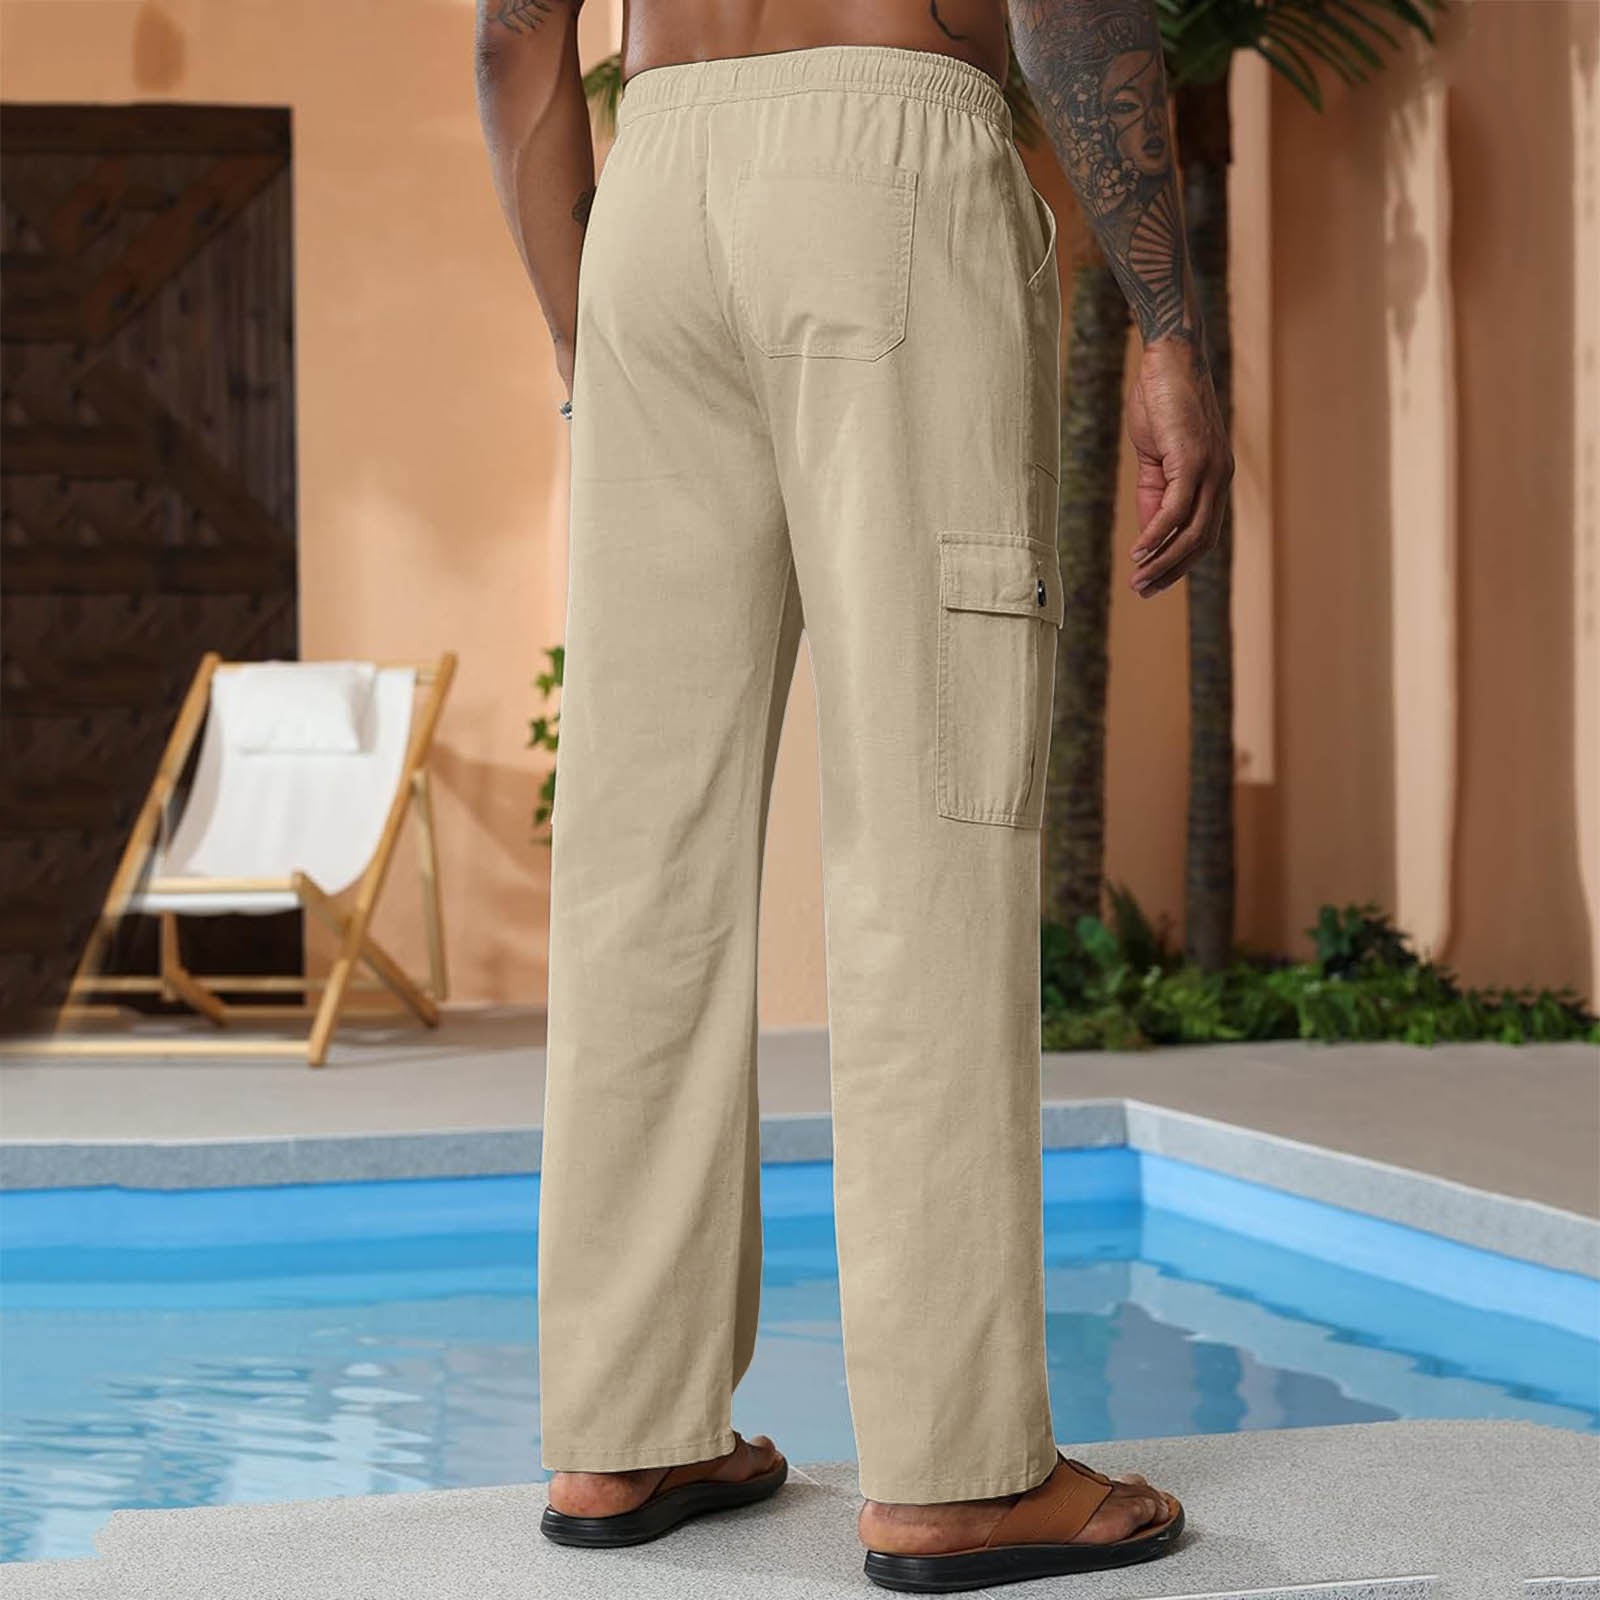 Men's Casual Linen Pants Elastic Waist Drawstring Yoga Beach Pants ...